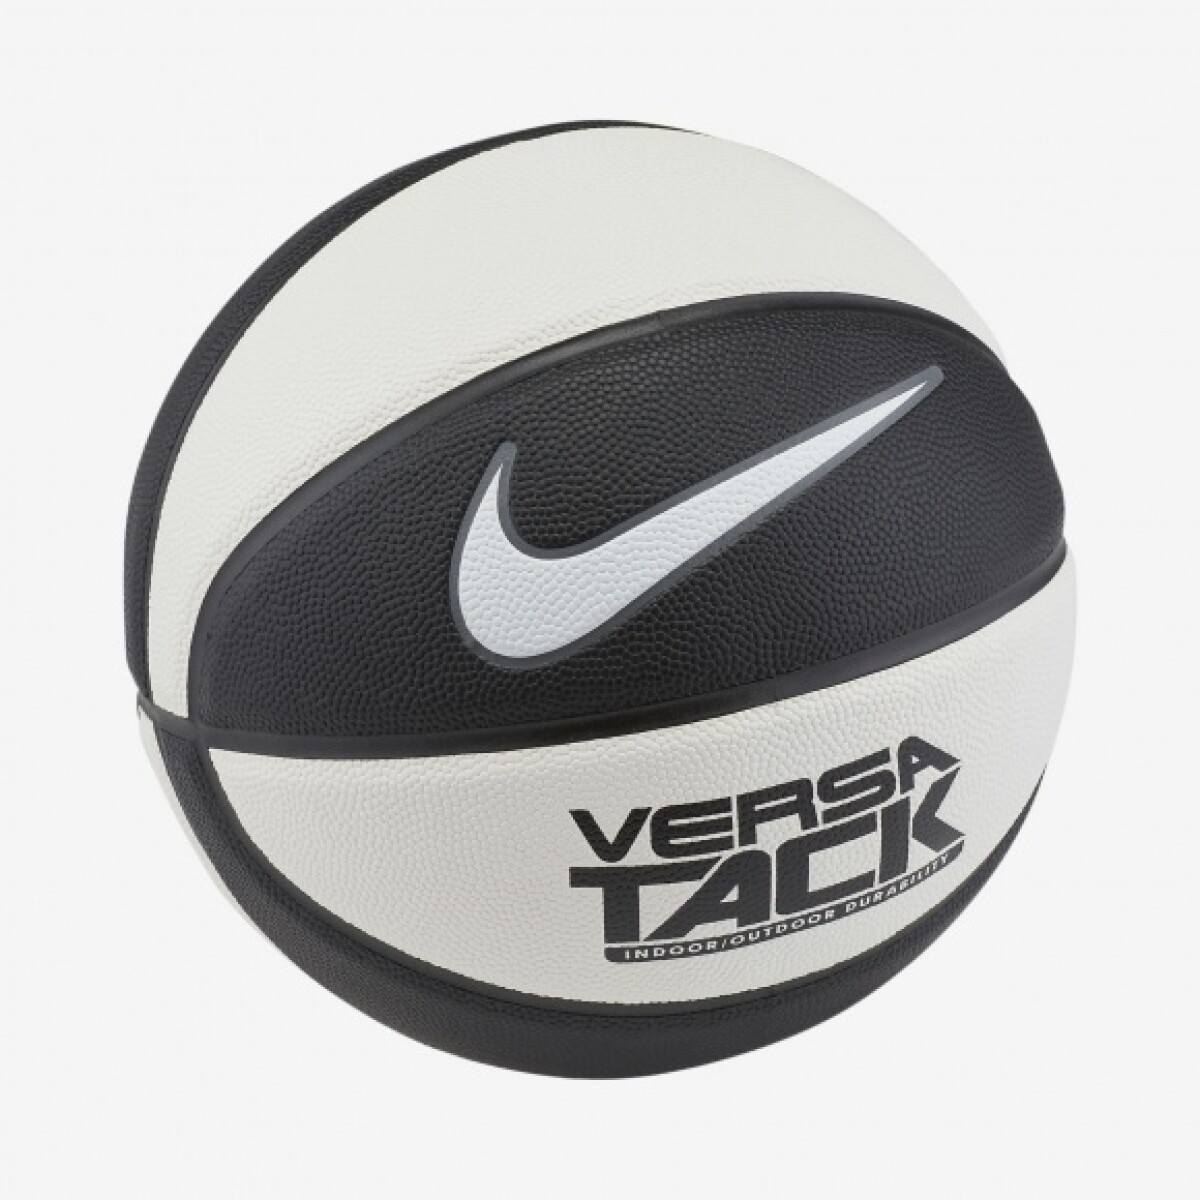 Pelota Basket Nike Versa Tack 8p Black/White - Color Único 